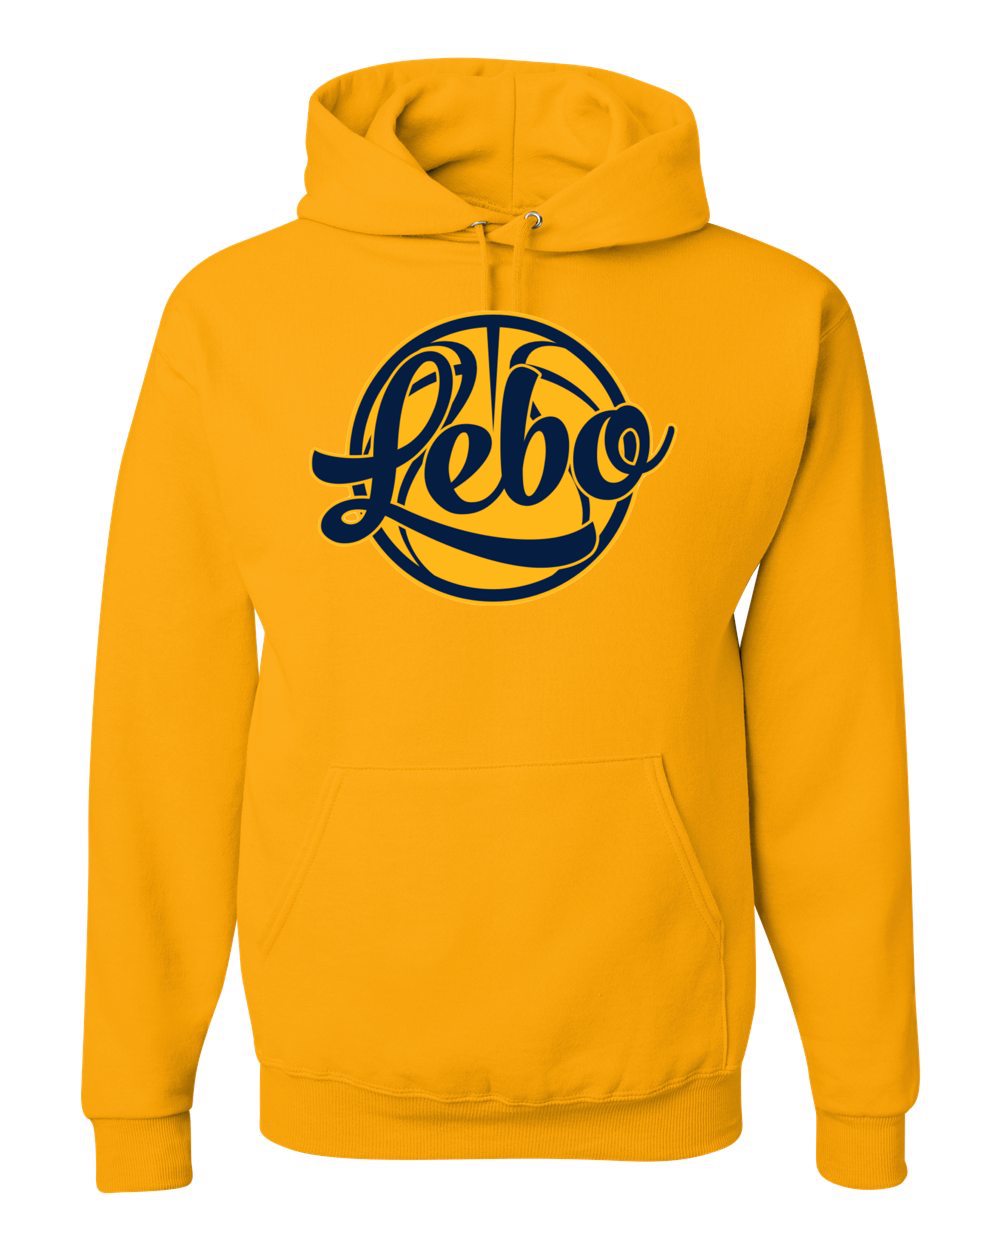 Lebo Hoops Ball Sweatshirt Gold